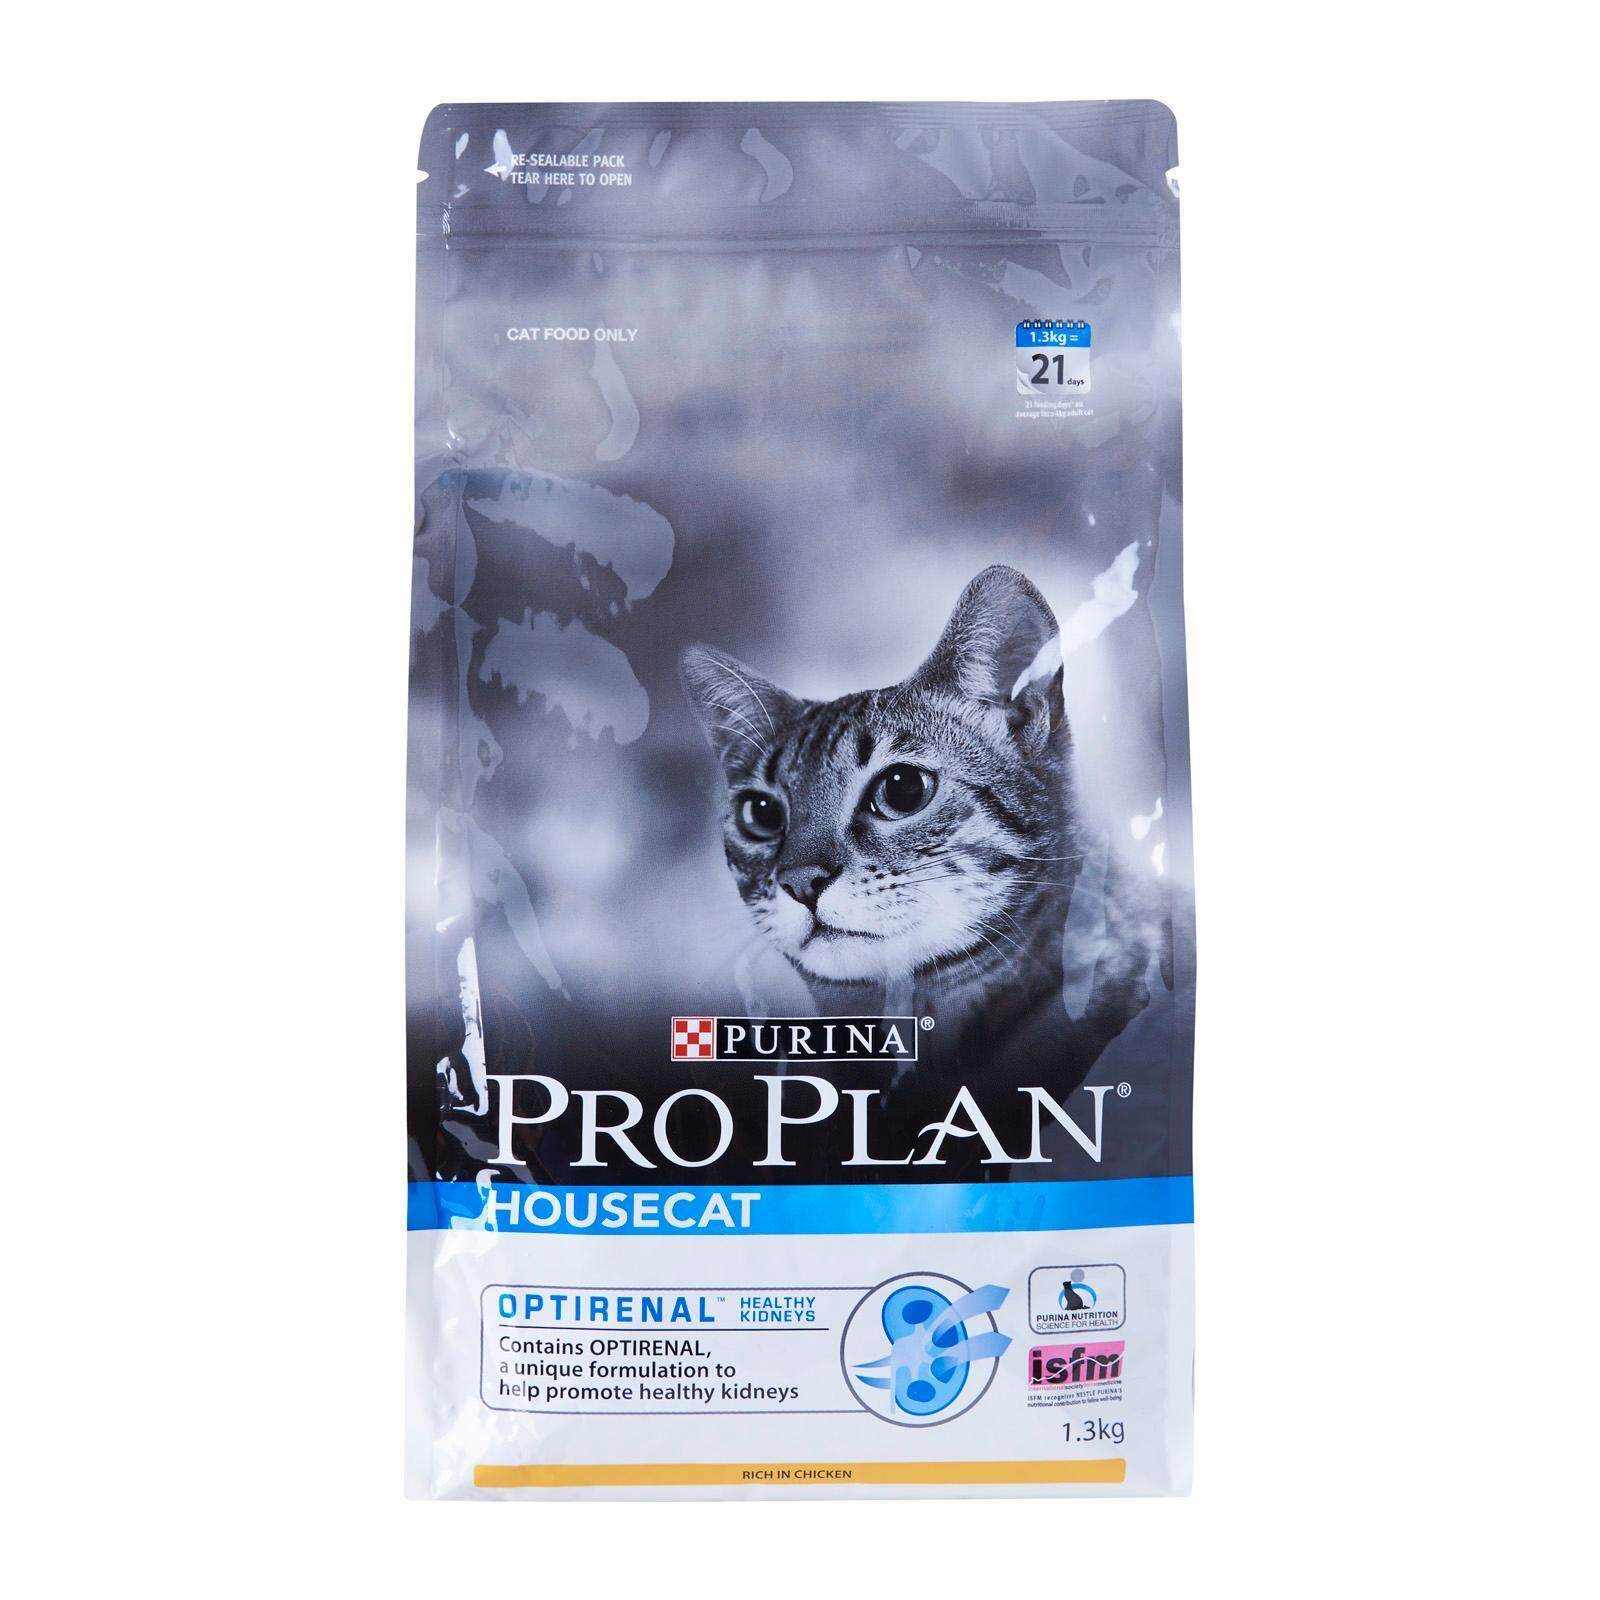 Pro Plan Housecat 1.3 Kg. อาหารแมว สูตรแมวเลี้ยงในบ้าน ช่วยคุมก้อนขน ลดกลิ่นมูล สำหรับแมวโต (1.3 กิโลกรัม/ถุง)